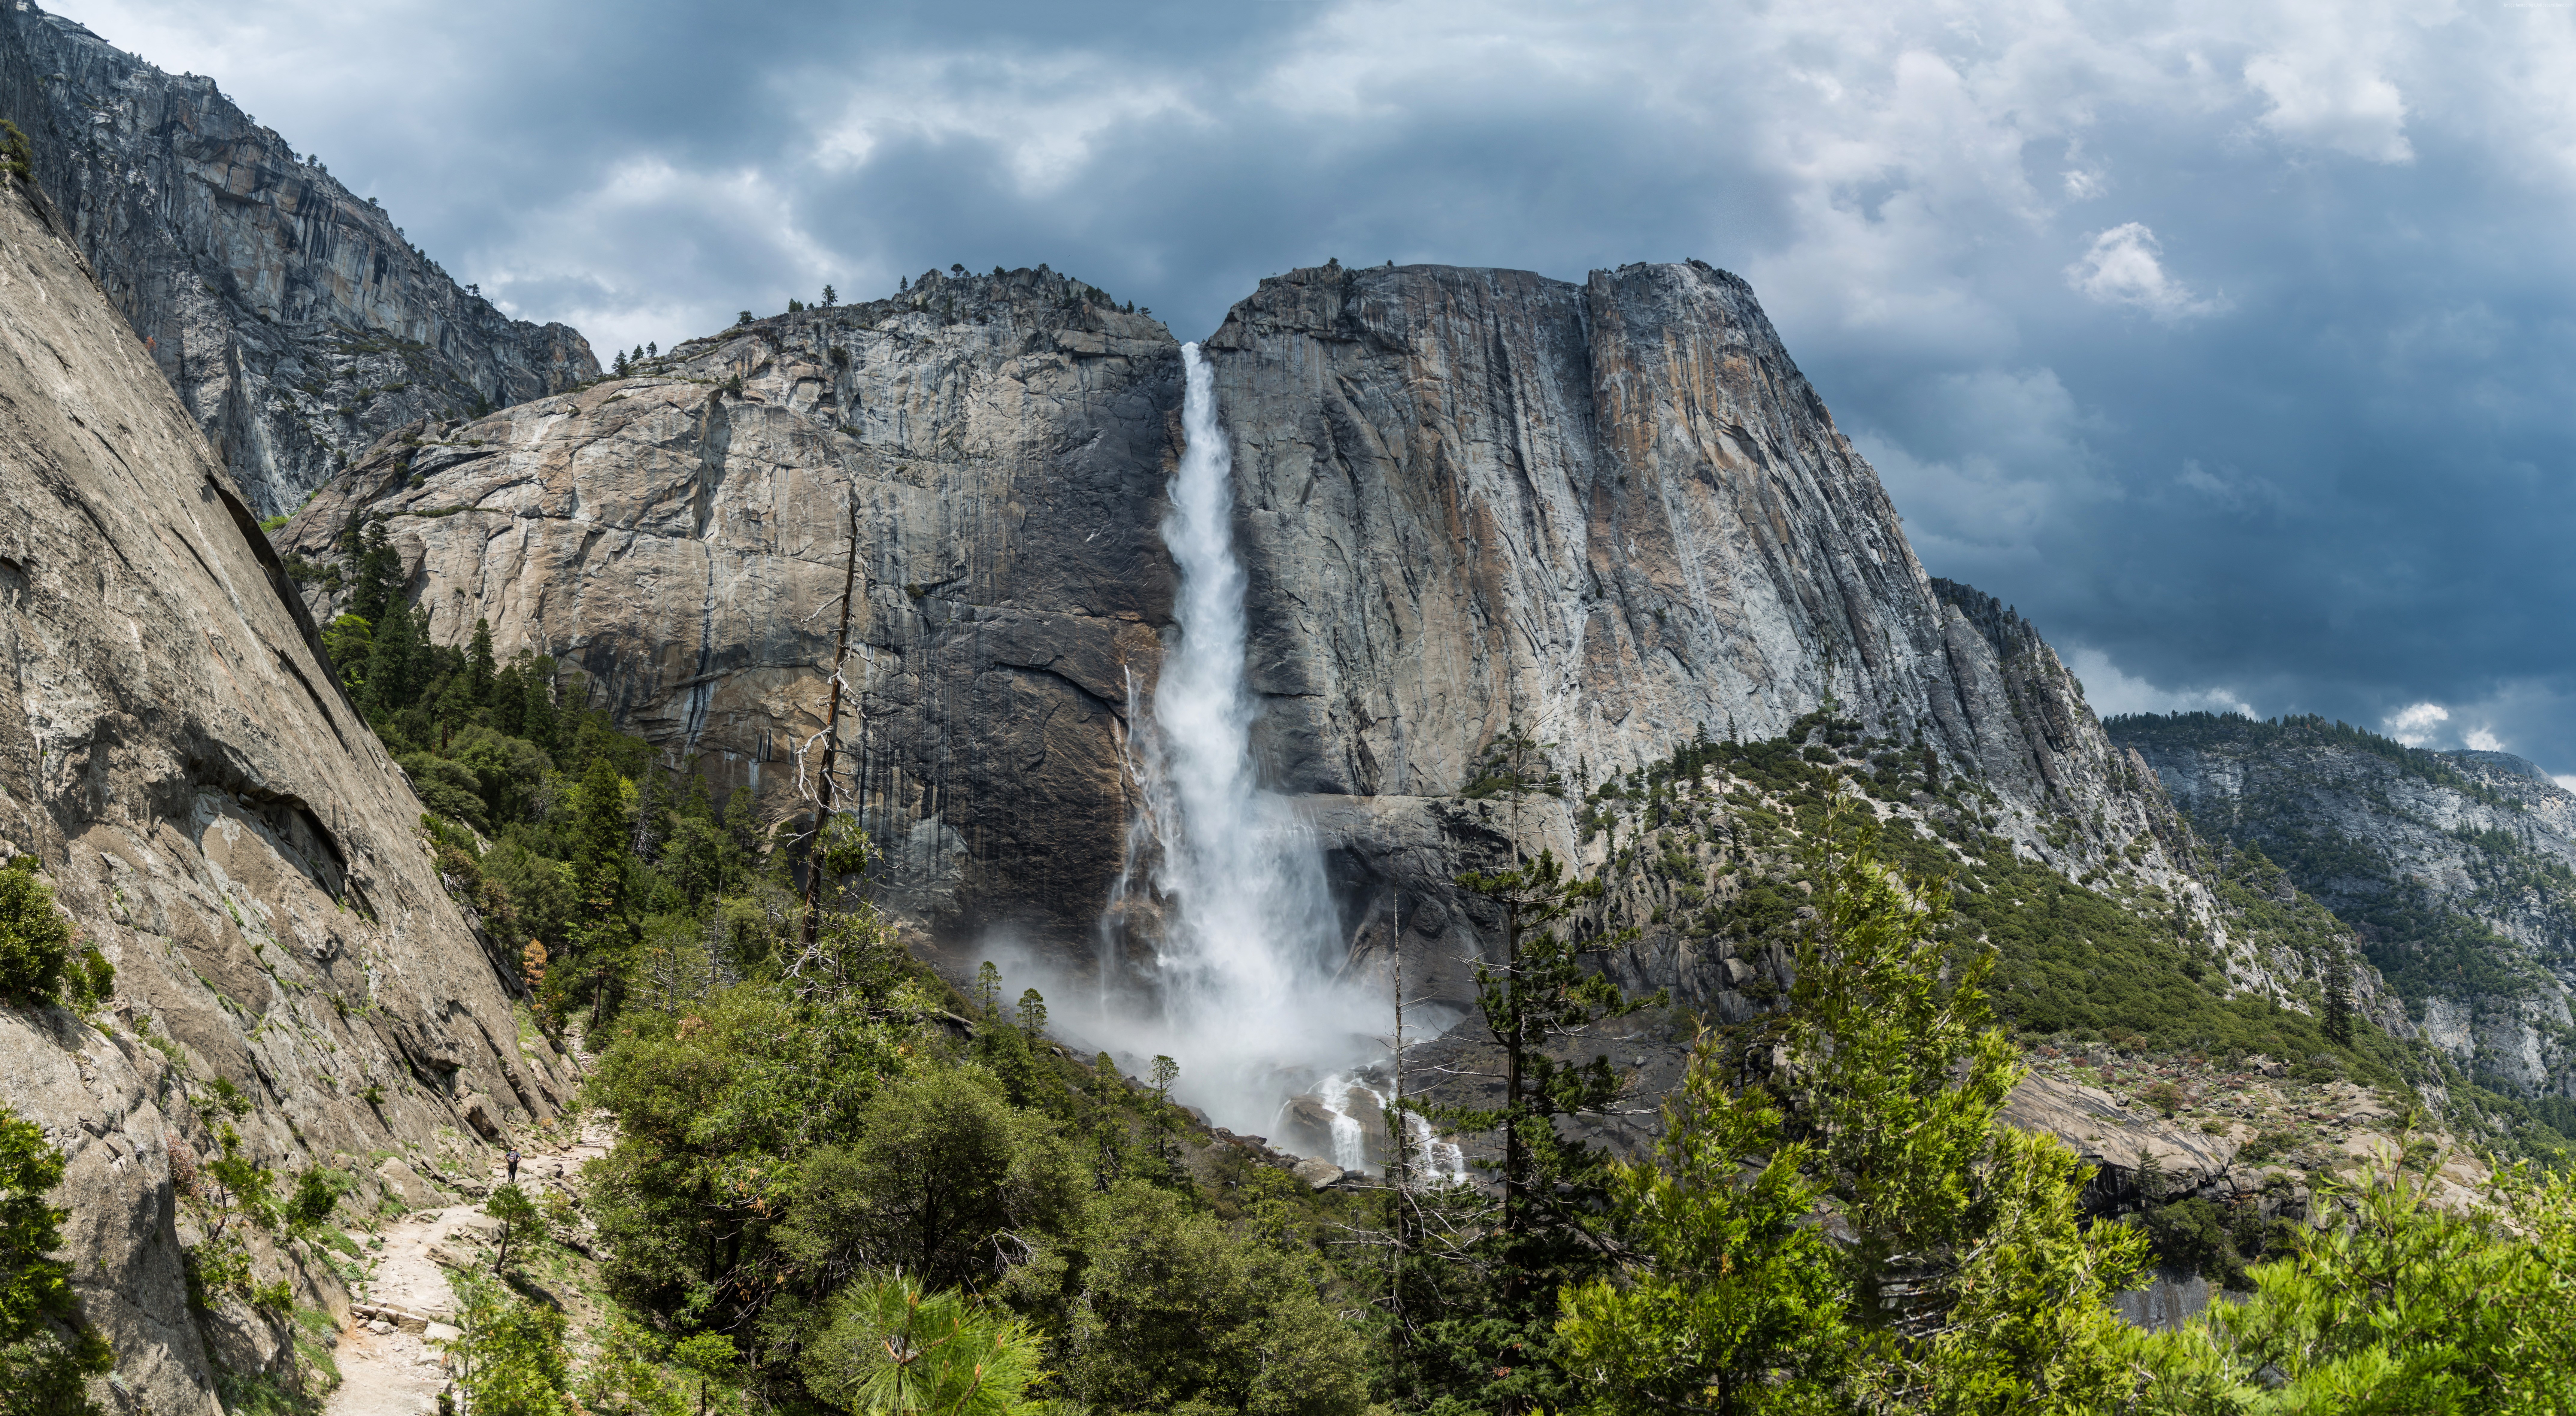 Mountain Rock Waterfall Yosemite National Park 8578x4715